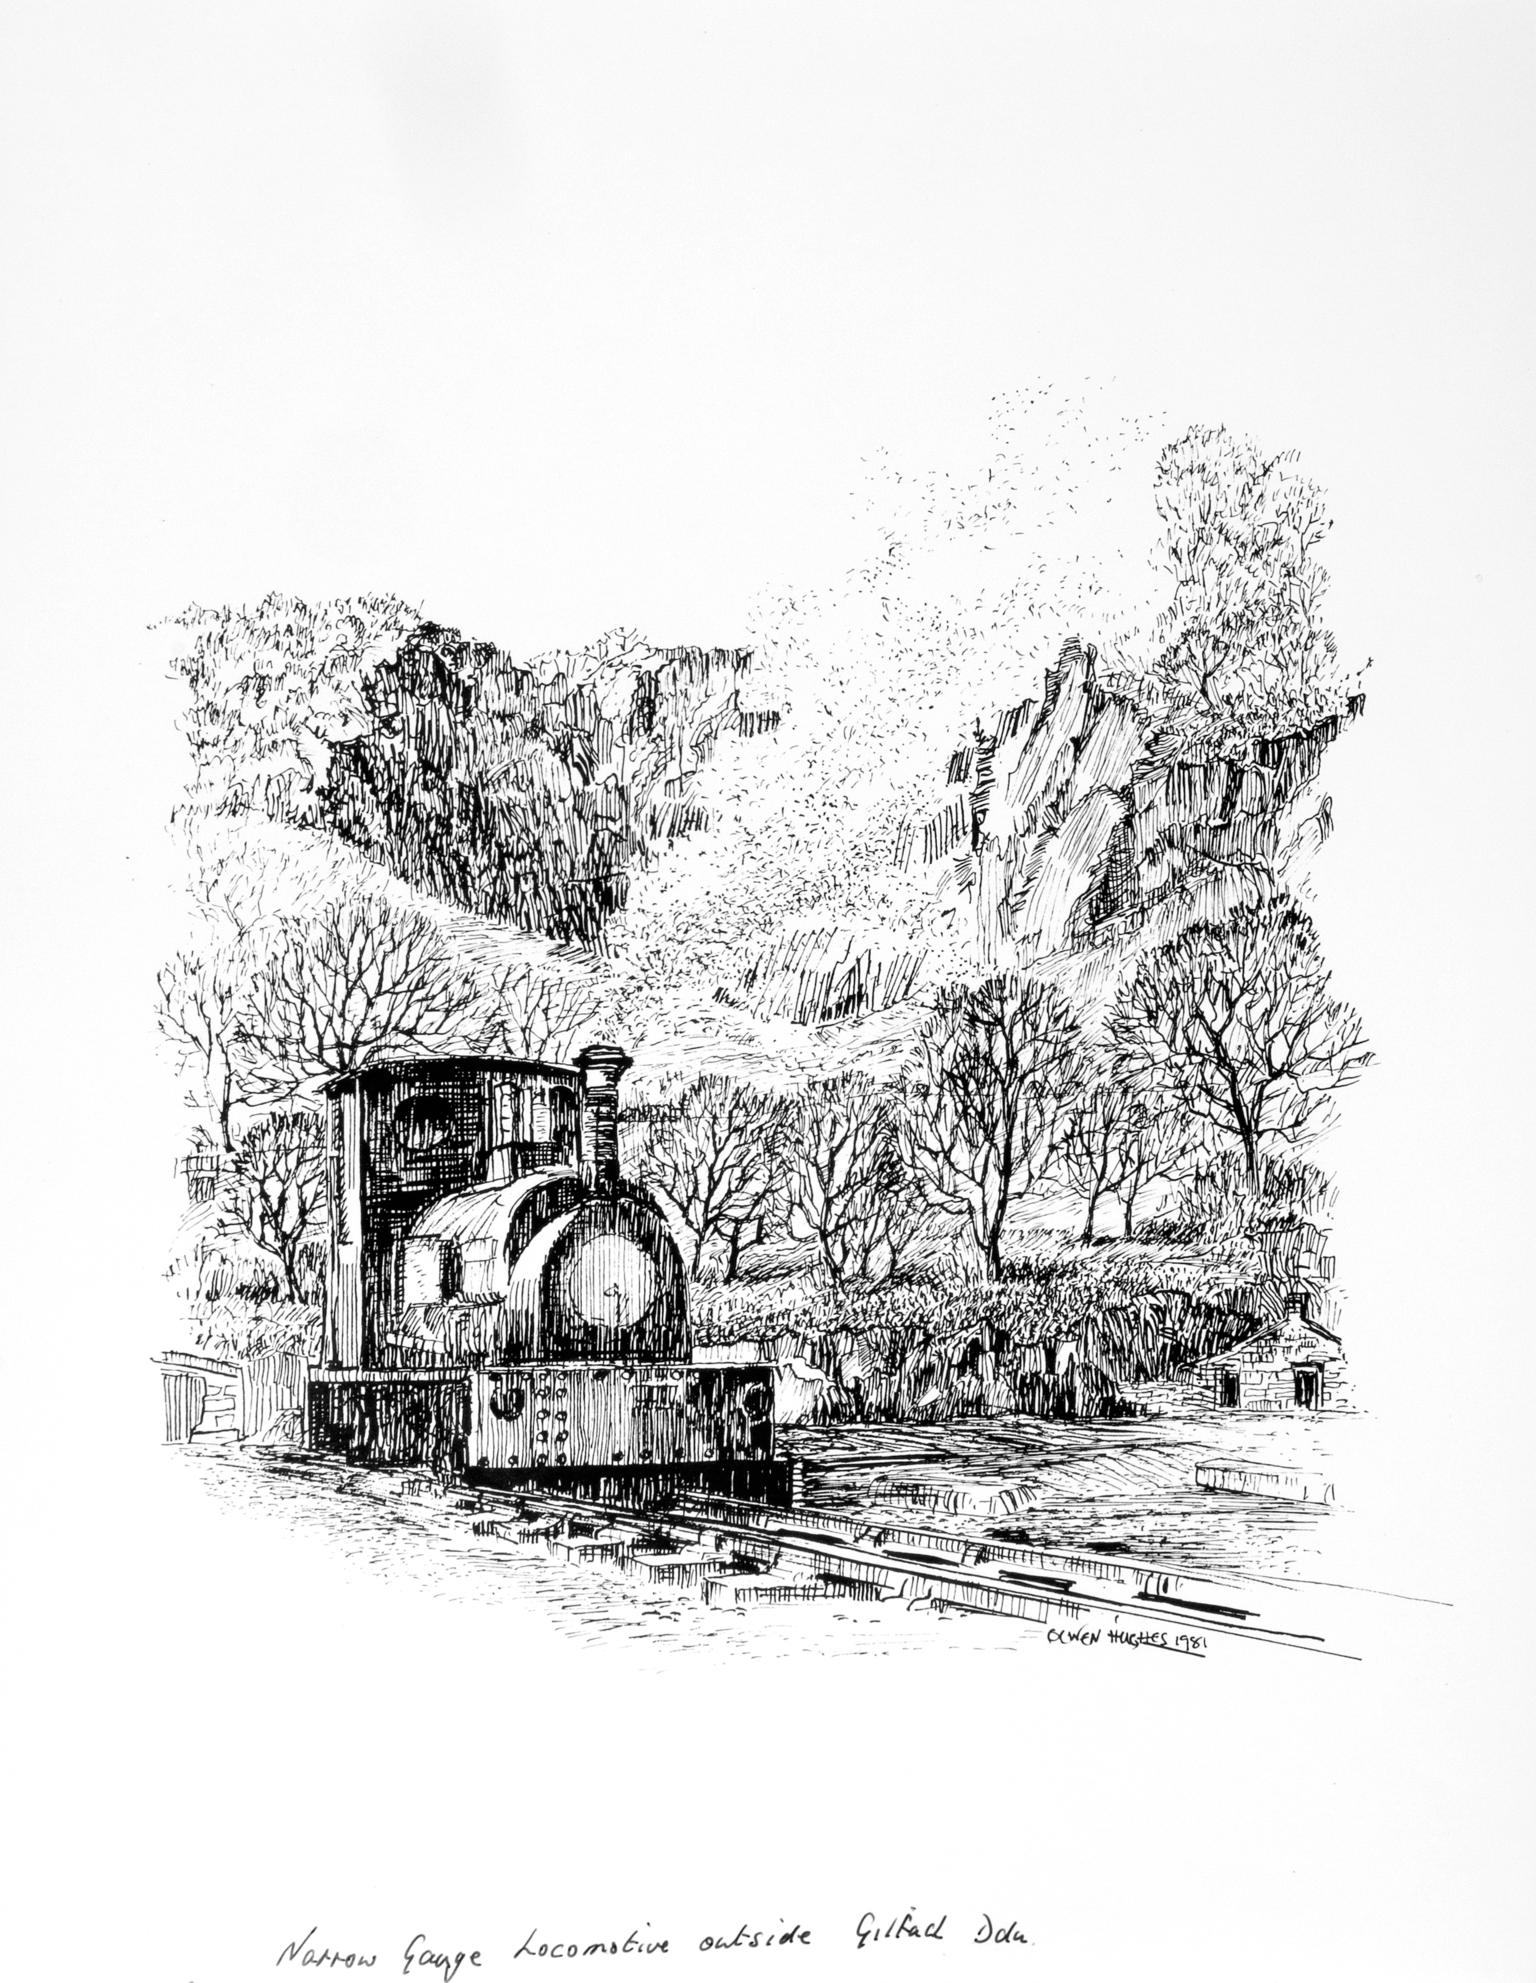 Narrow Gauge Locomotive Outside Gilfach Coch (print)